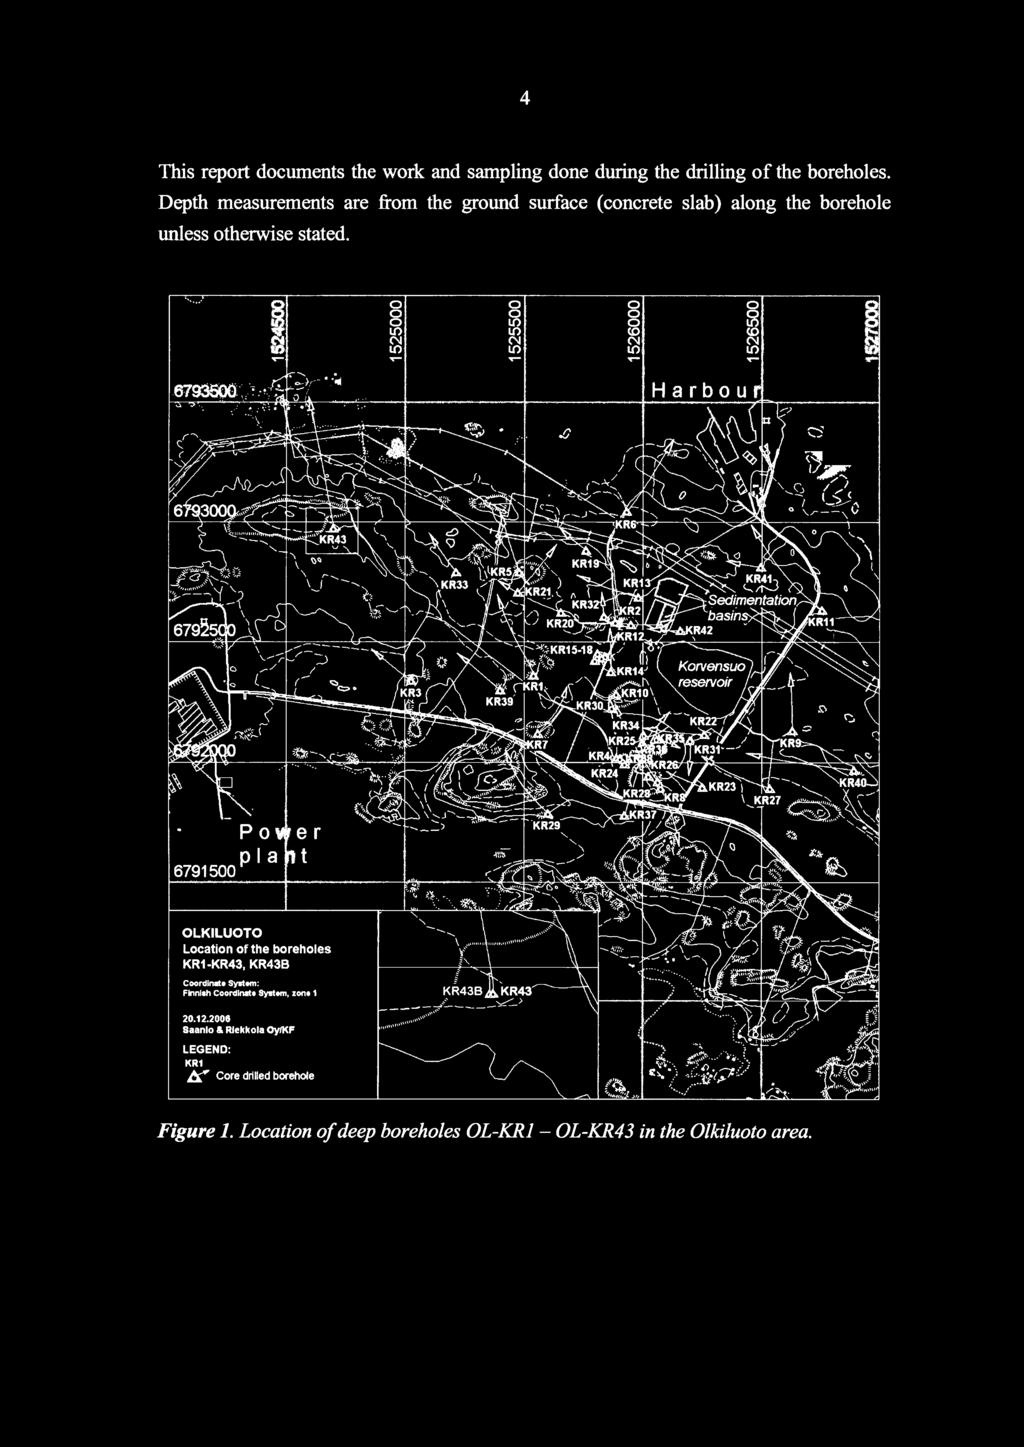 ....c P o er pi a t 6791500 OLKILUOTO Location of the boreholes KR1-KR43, KR43B Coordinate Syatem: Finnish Coordinate